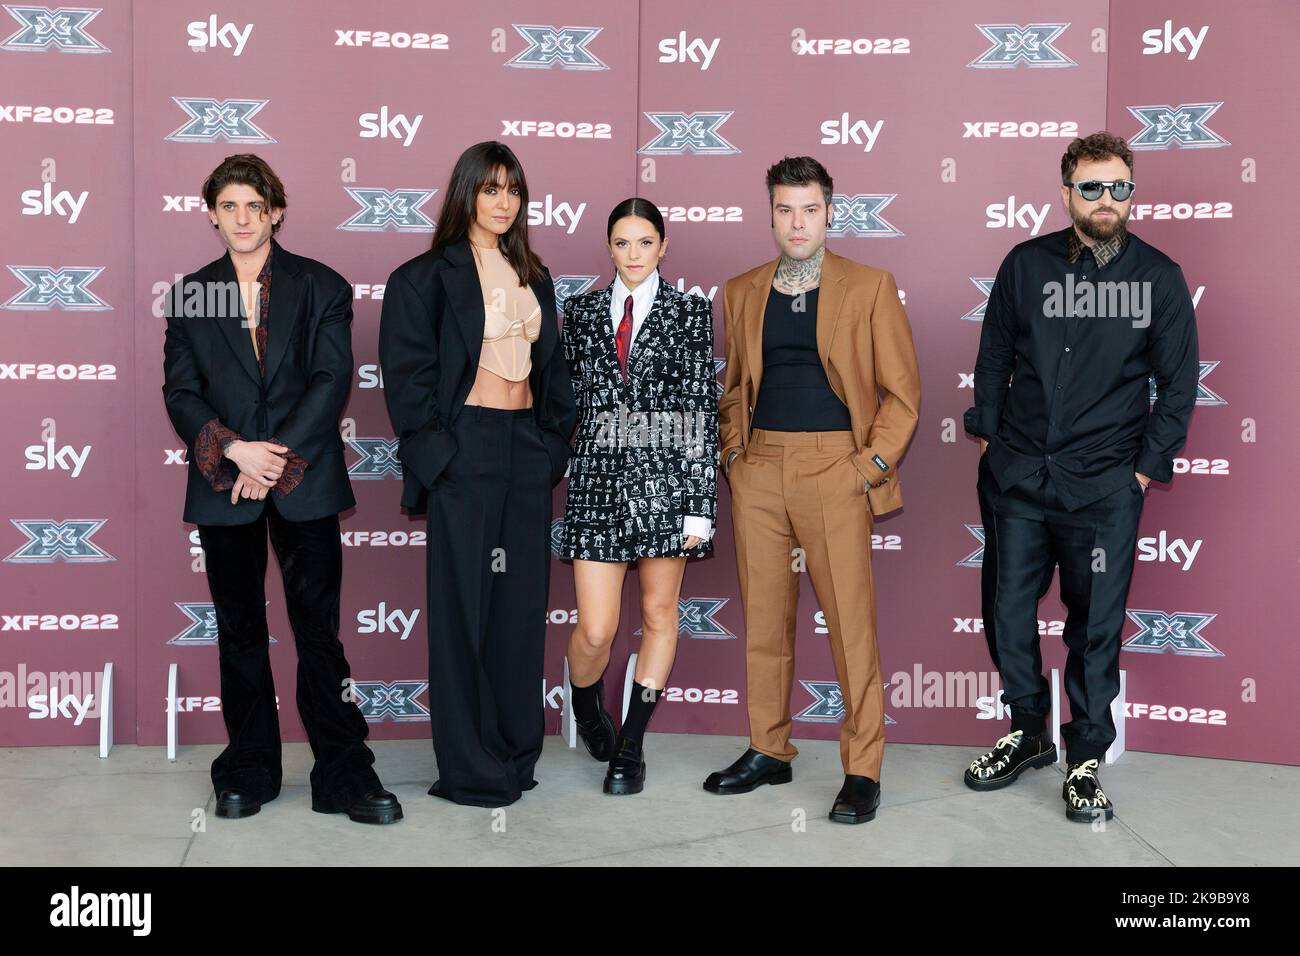 MILANO, ITALY - OCTOBER 25: Rkomi, Ambra Angiolini, Francesca Michielin, Fedez, Dargen D'Amico attend the X Factor Live Photo-call at Repower Theatre Stock Photo